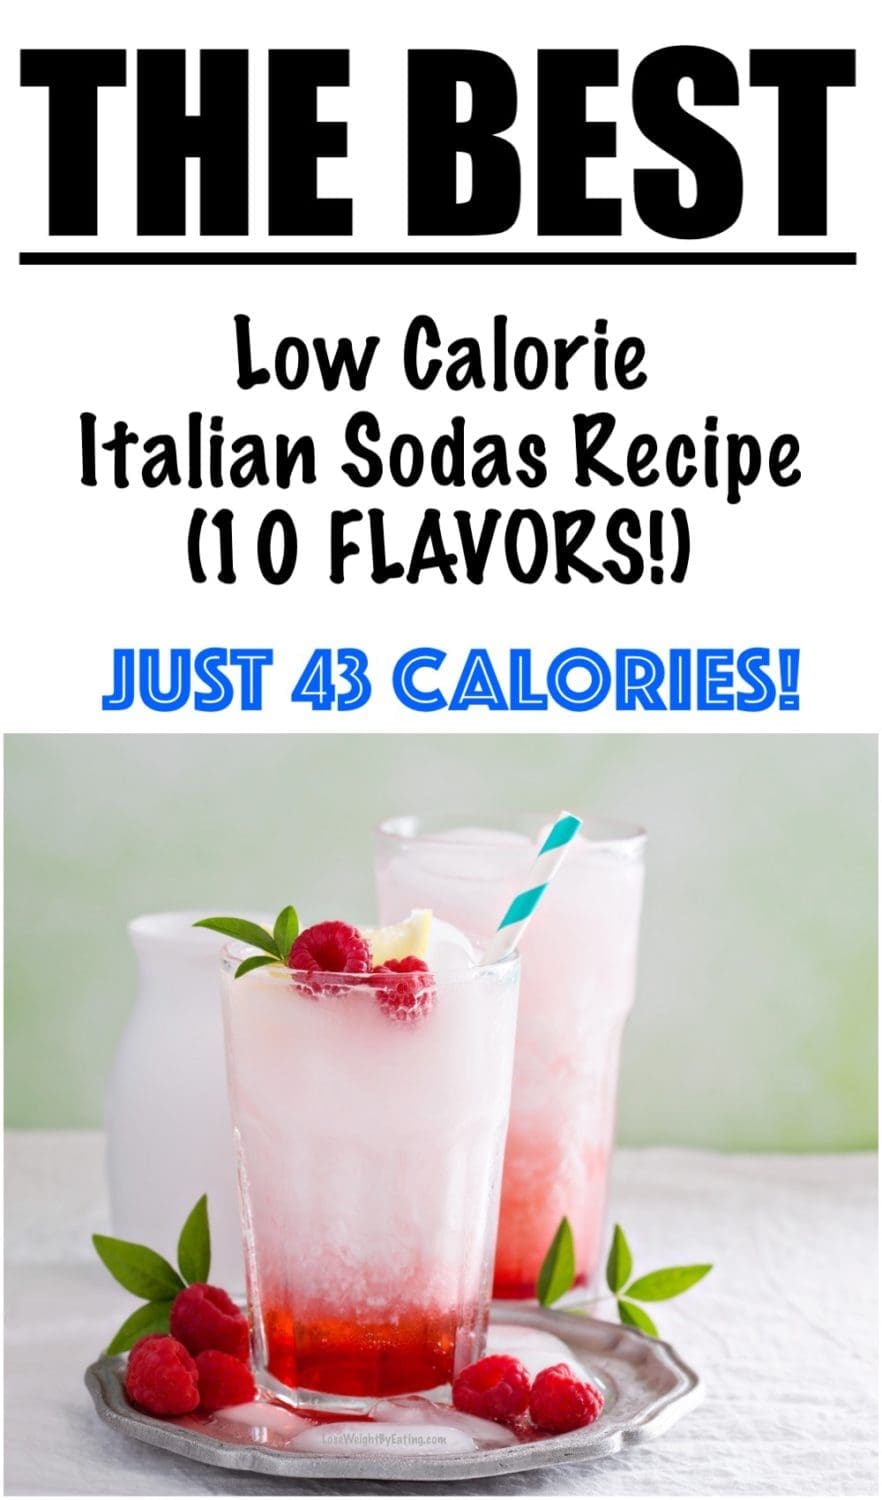 Low Calorie Italian Sodas Recipe